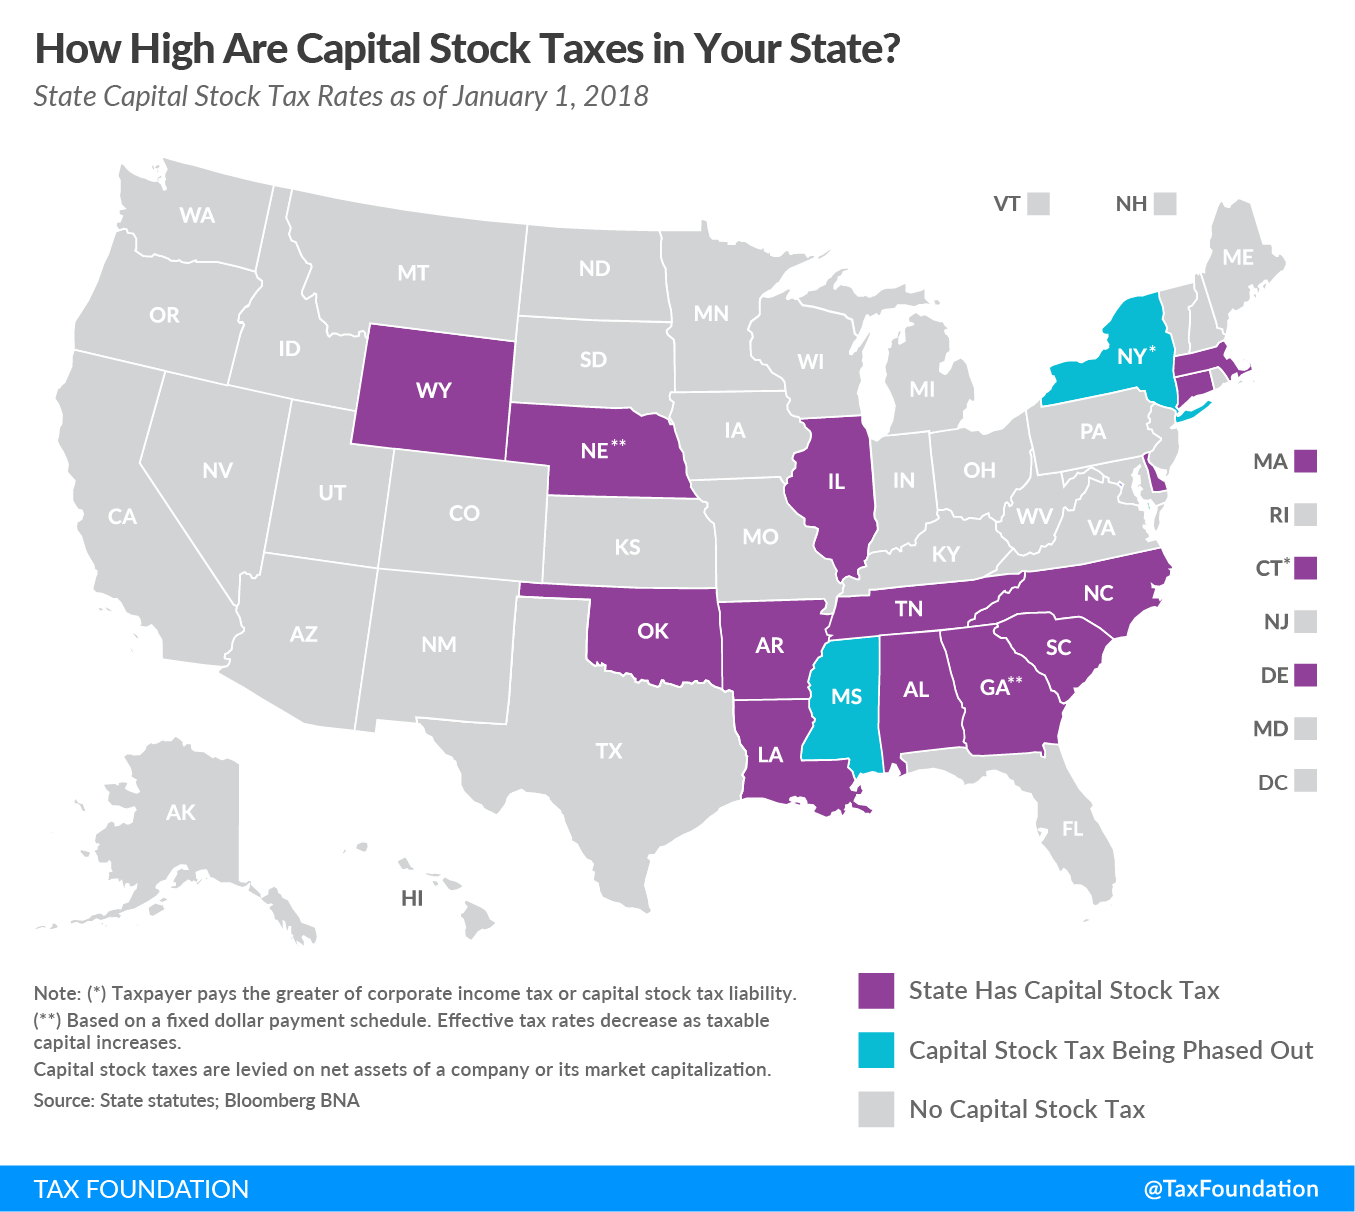 Connecticut capital stock tax